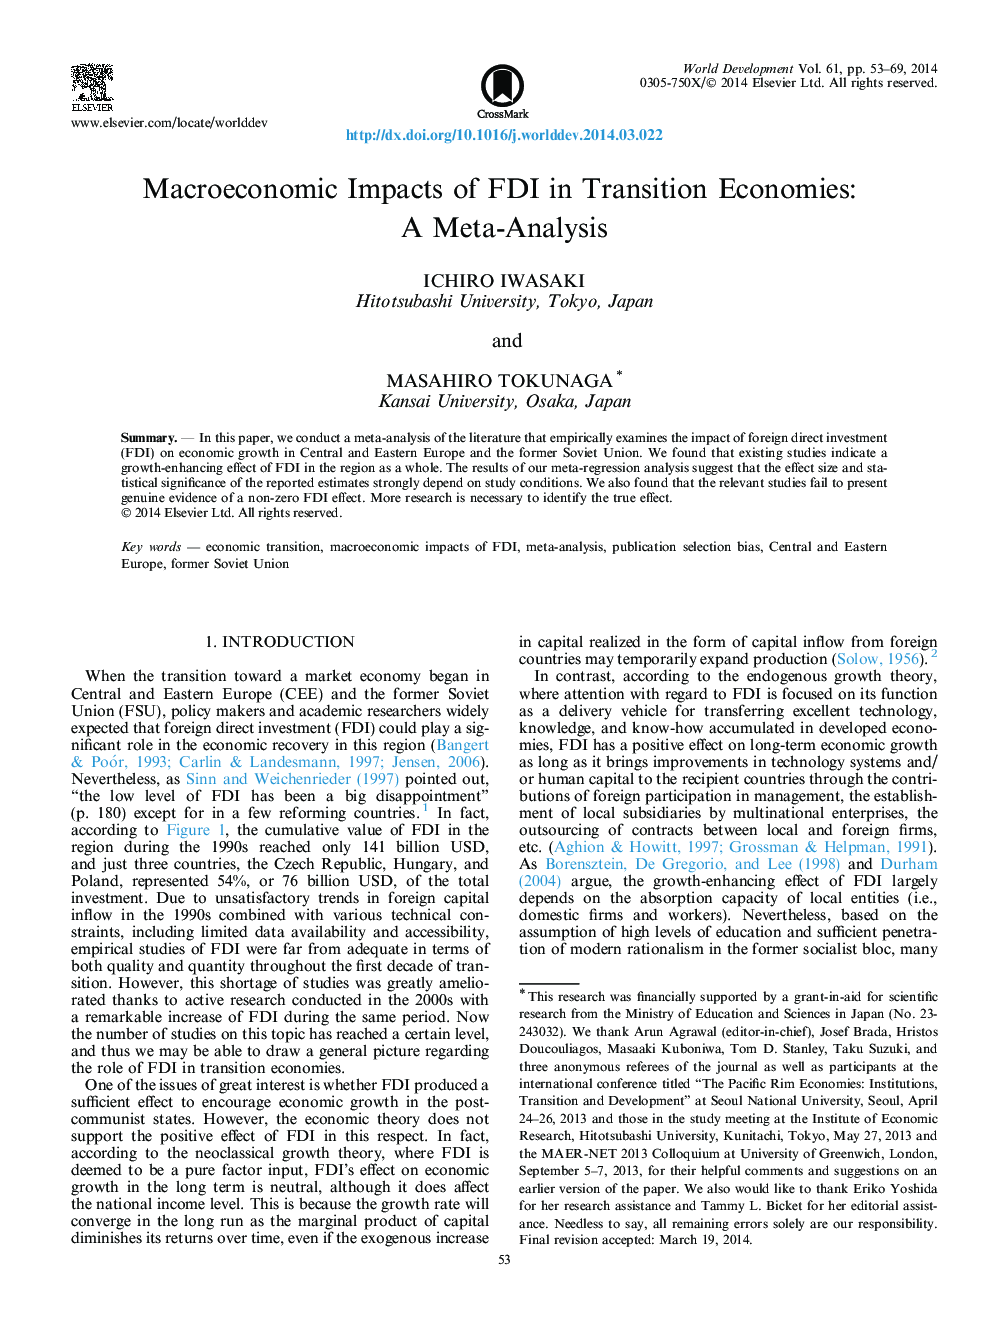 Macroeconomic Impacts of FDI in Transition Economies: A Meta-Analysis